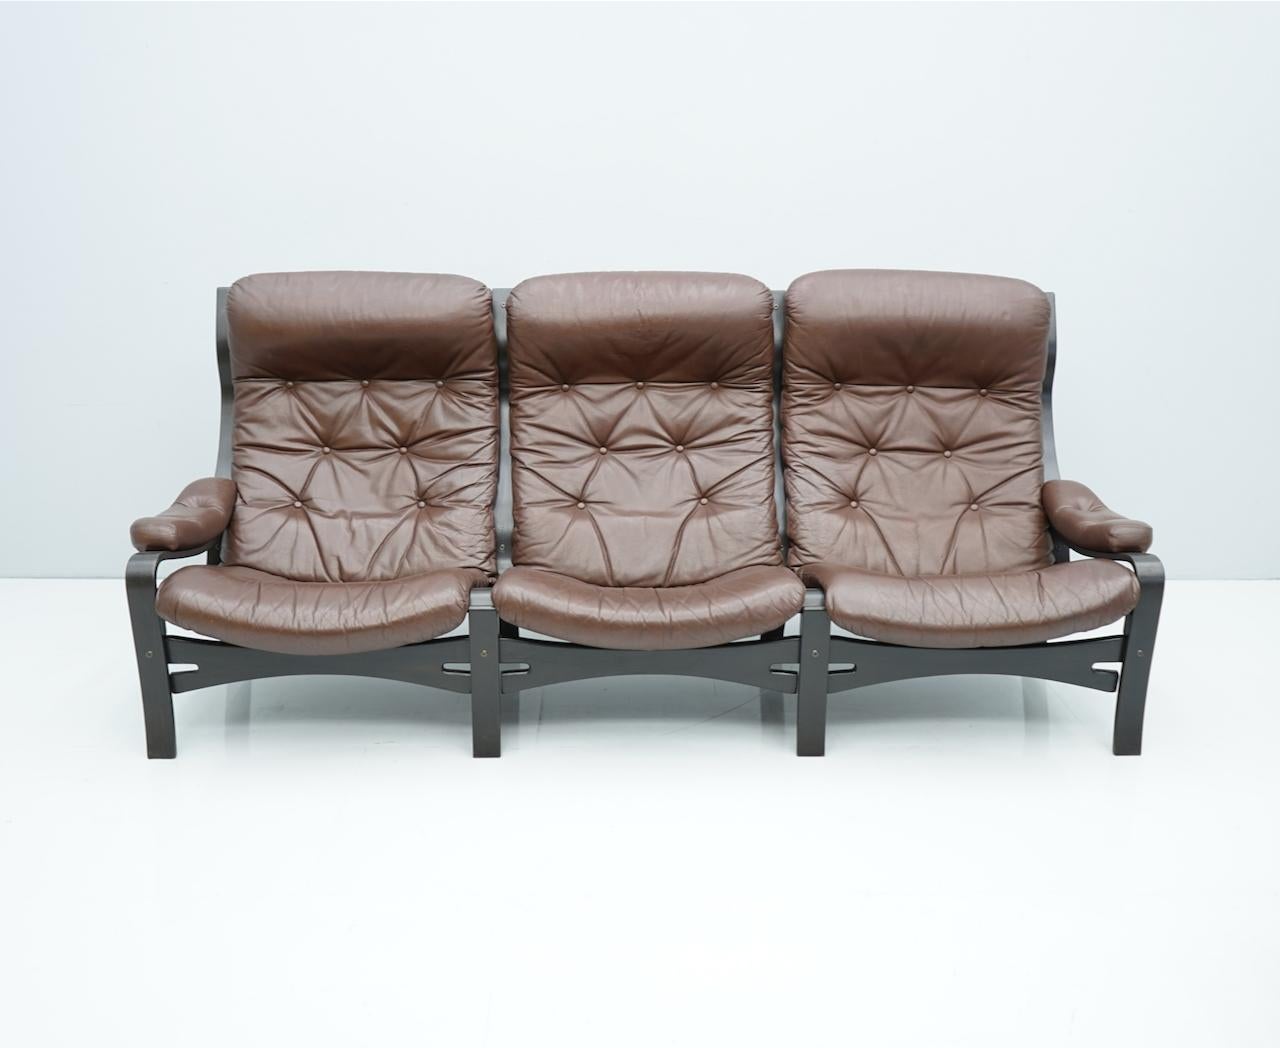 Scandinavian Modern Scandinavian Three Seat Sofa in Brown Leather and Wood IKEA 1970s For Sale